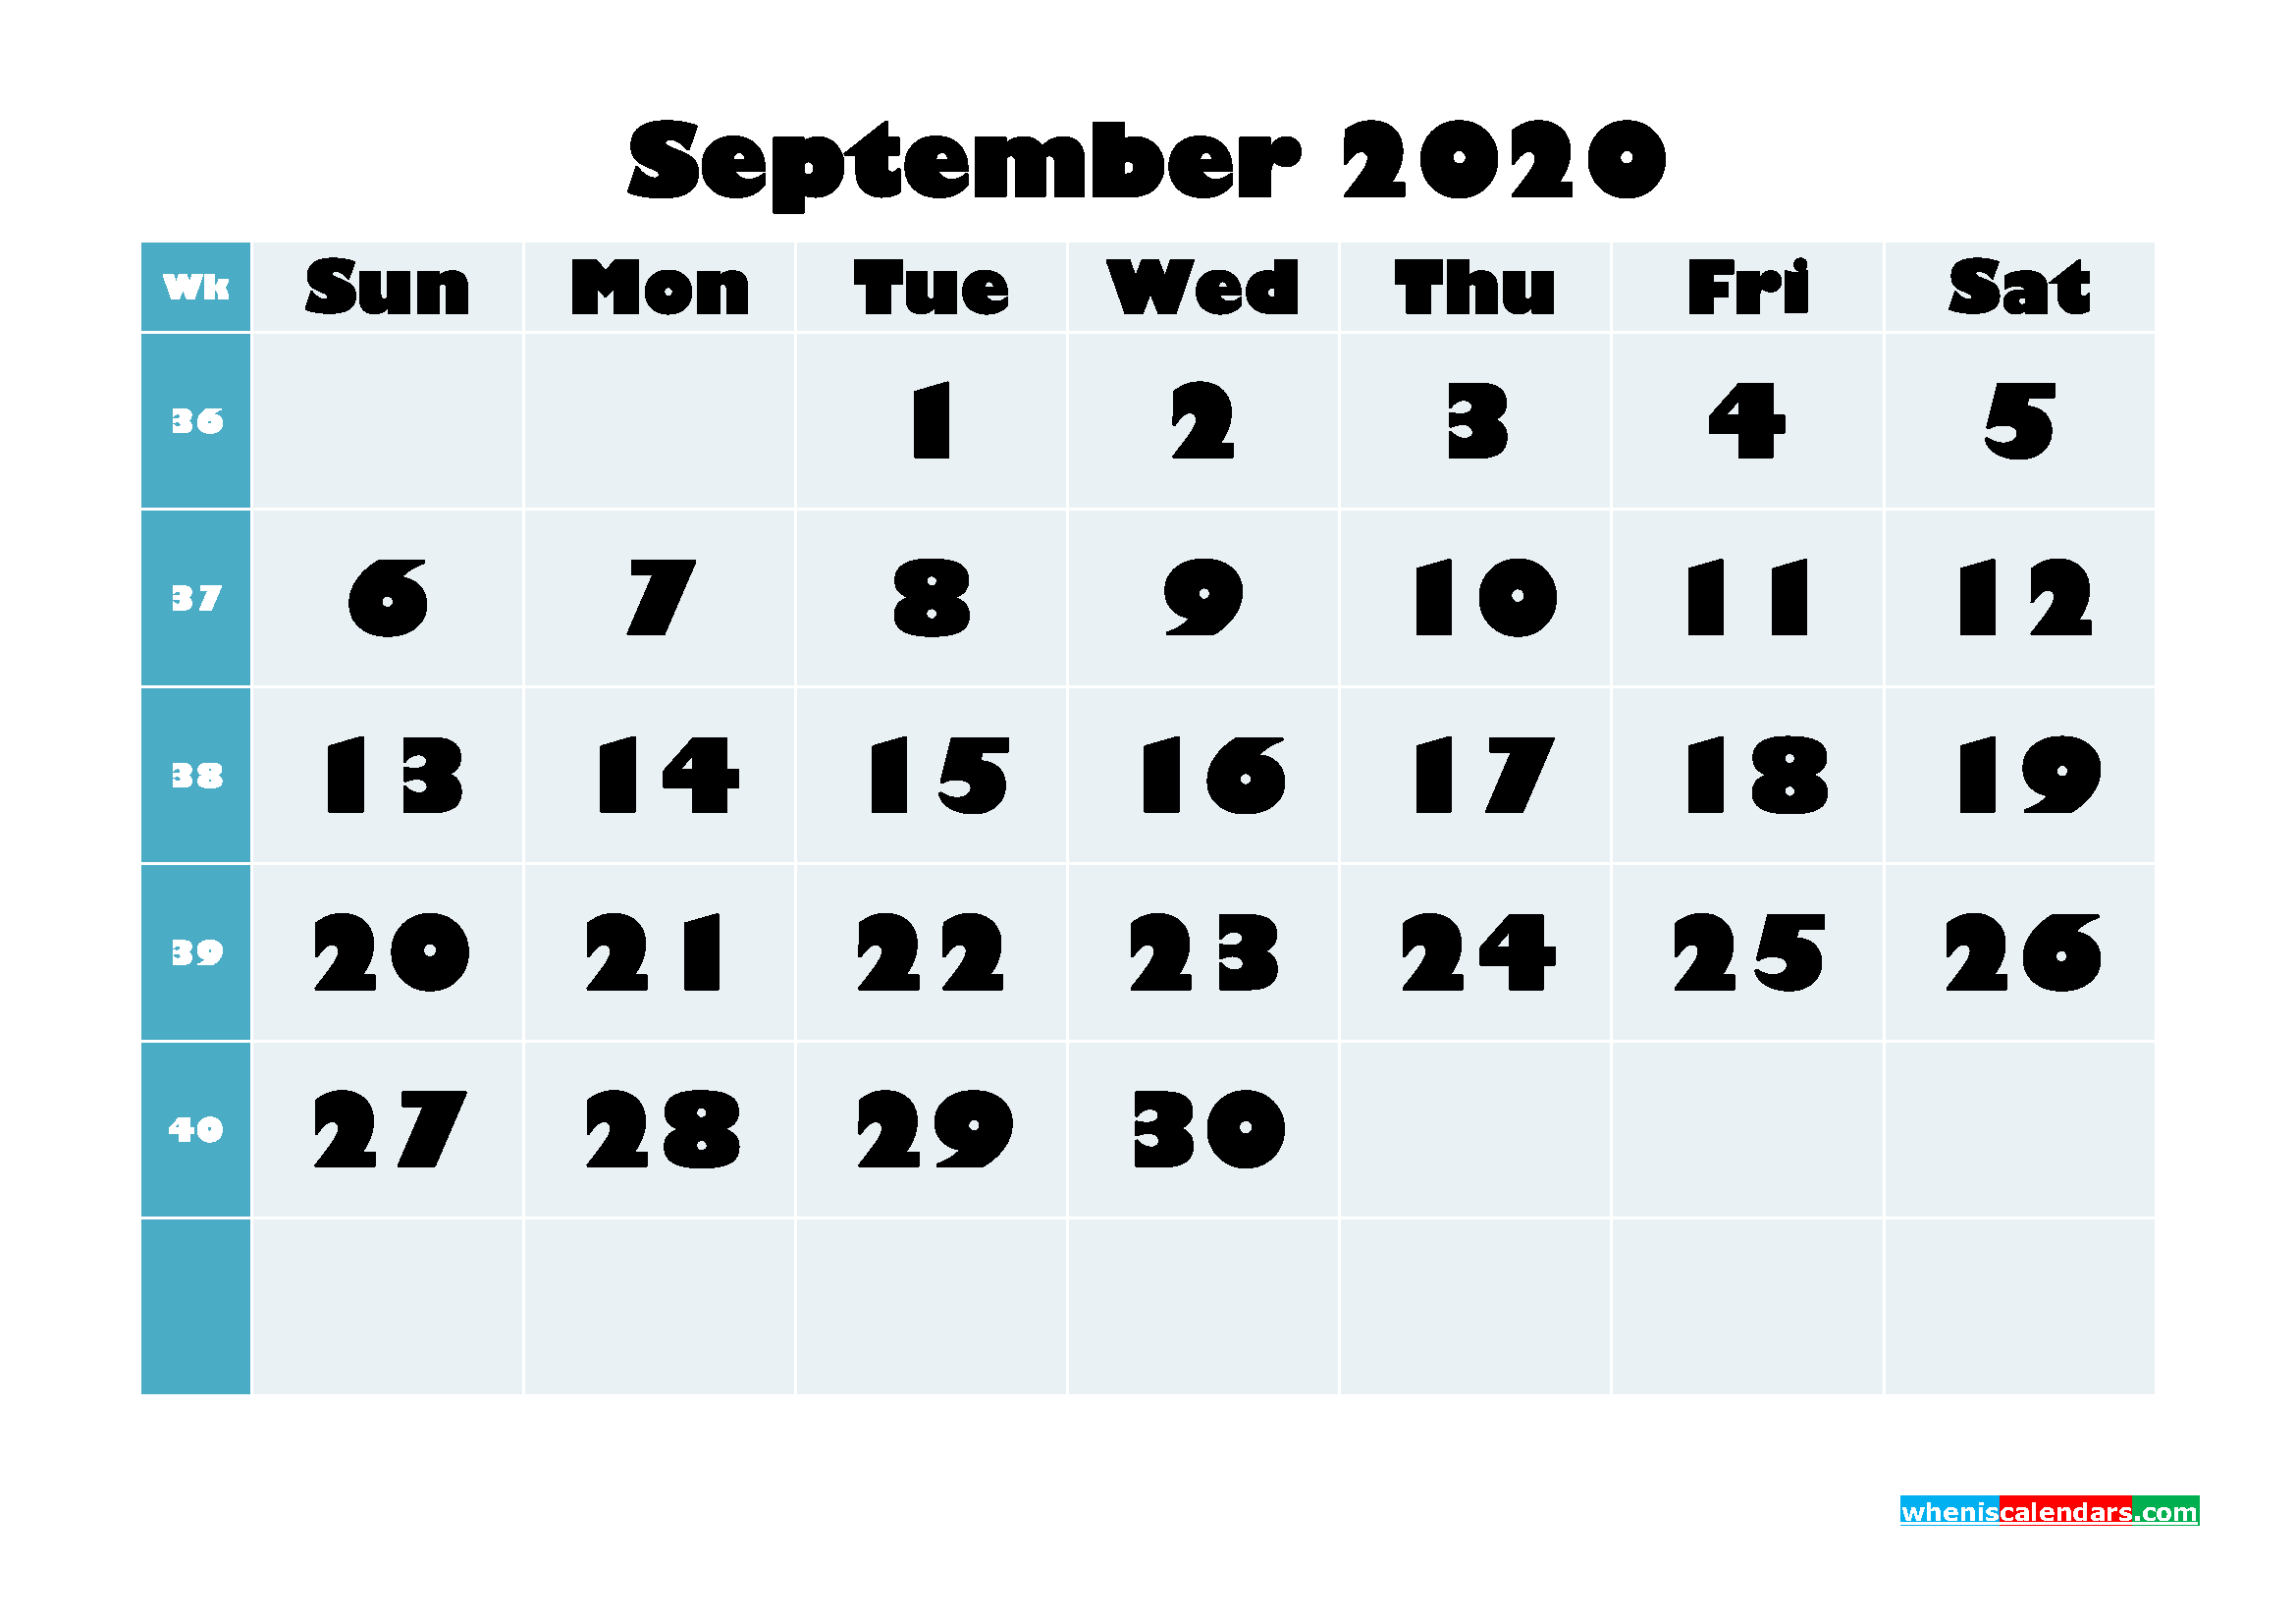 September 2020 Monthly Calendar Template Word